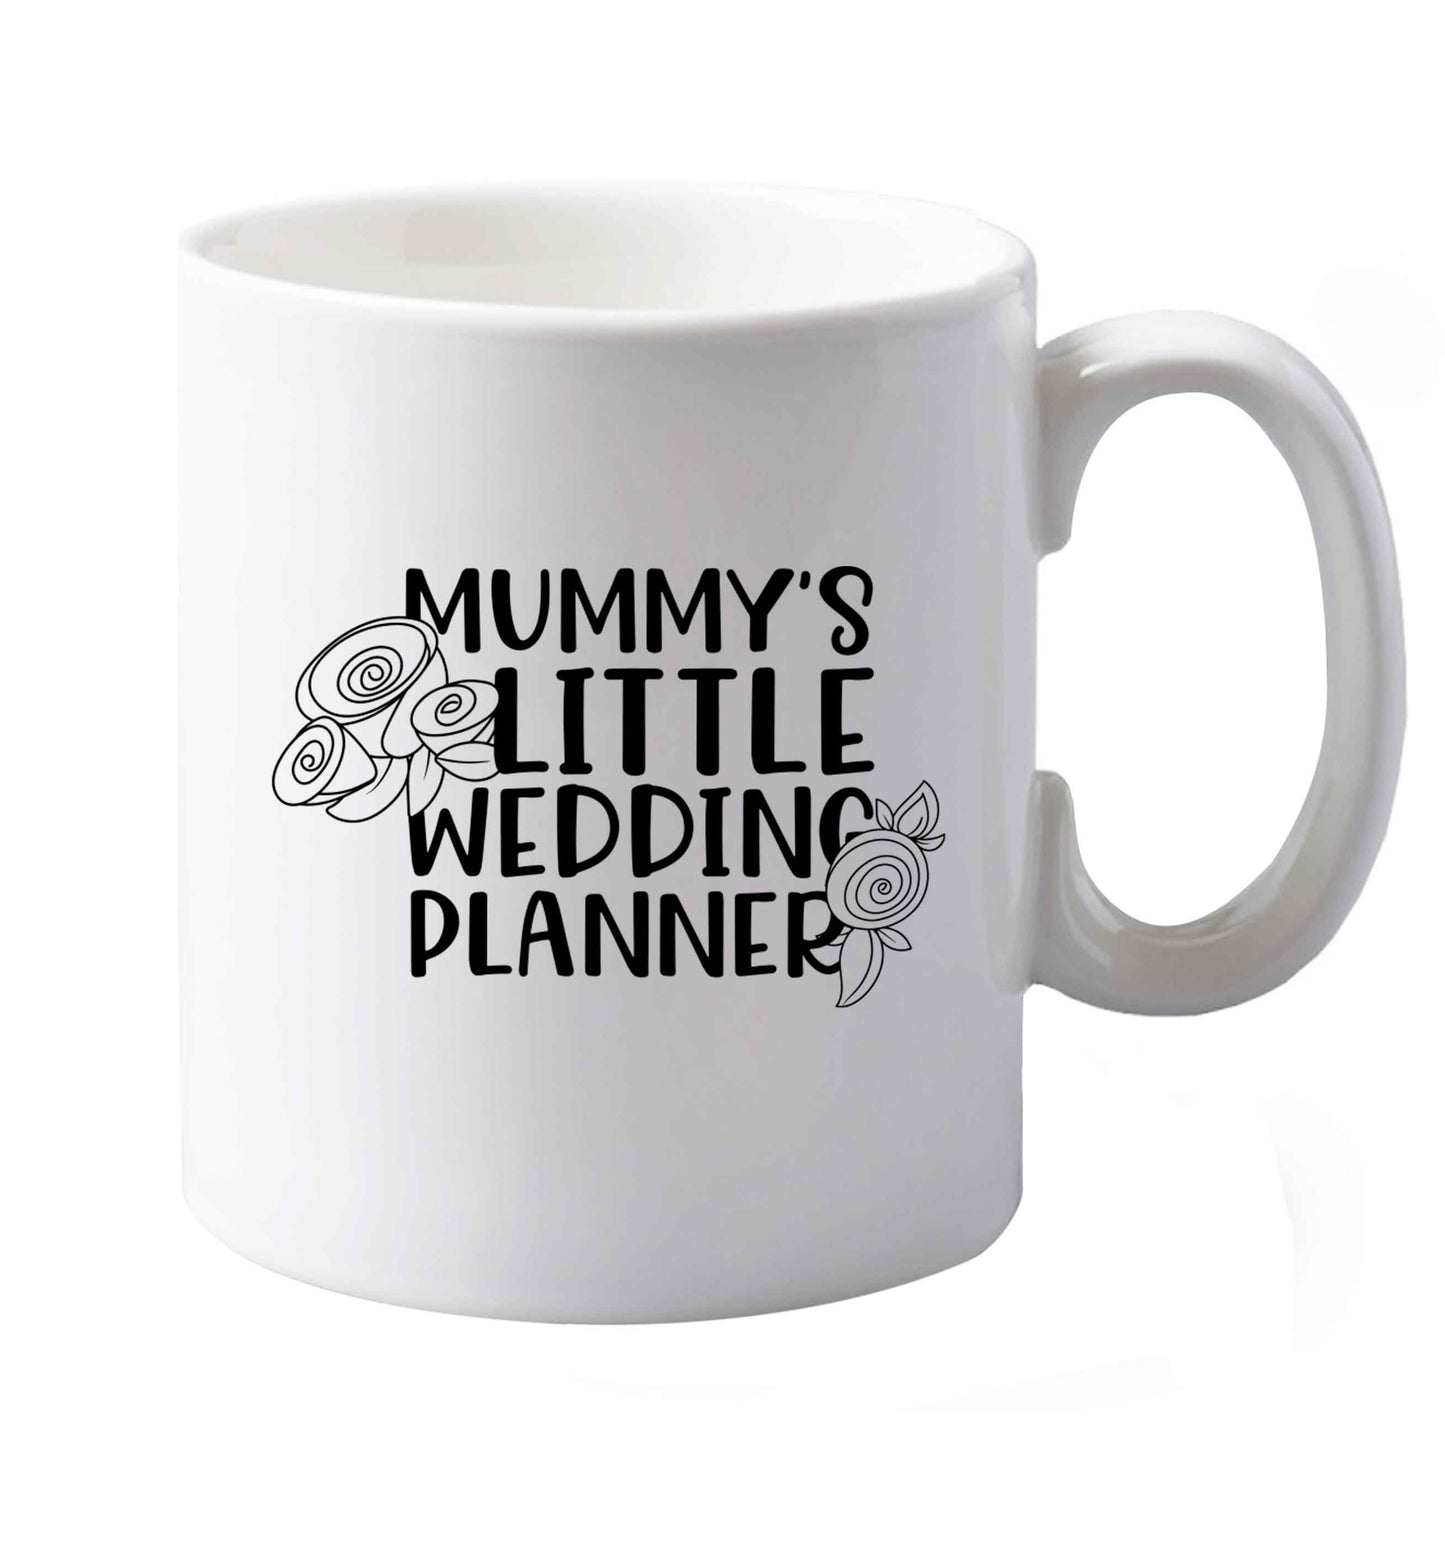 10 oz adorable wedding themed gifts for your mini wedding planner!   ceramic mug both sides